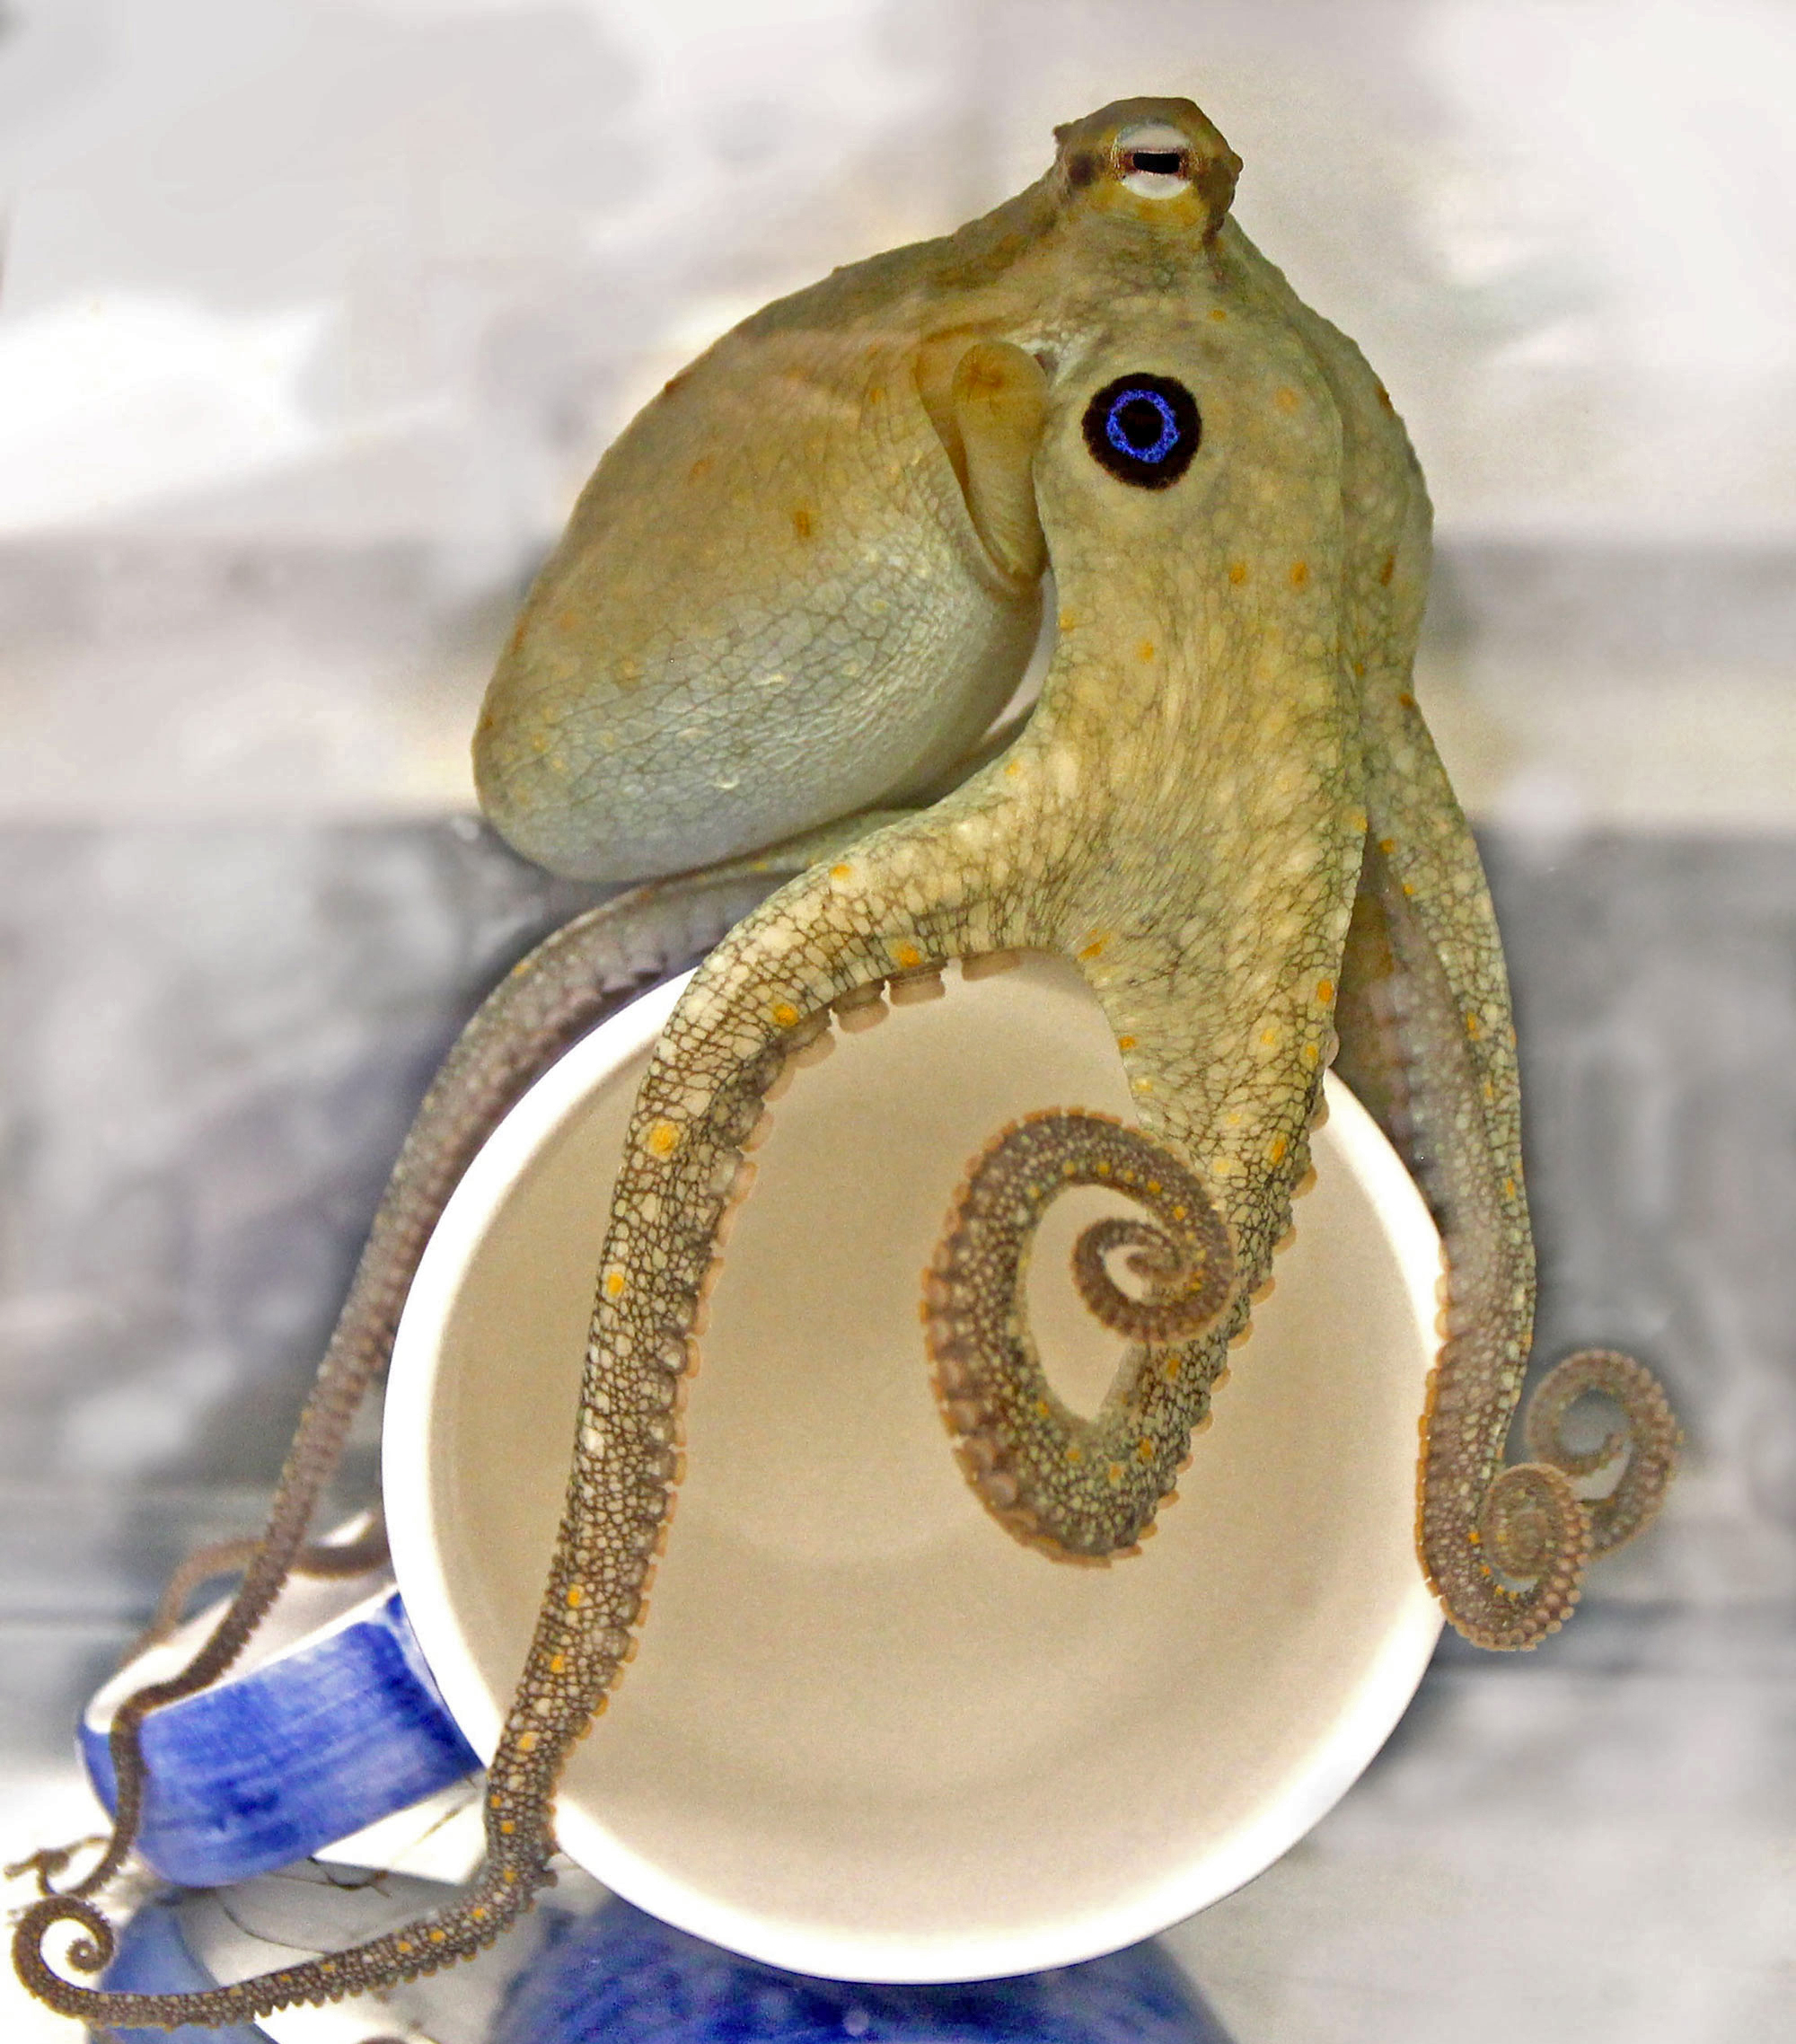 Octopus touch-tasting a cup. (Lena van Giesen)